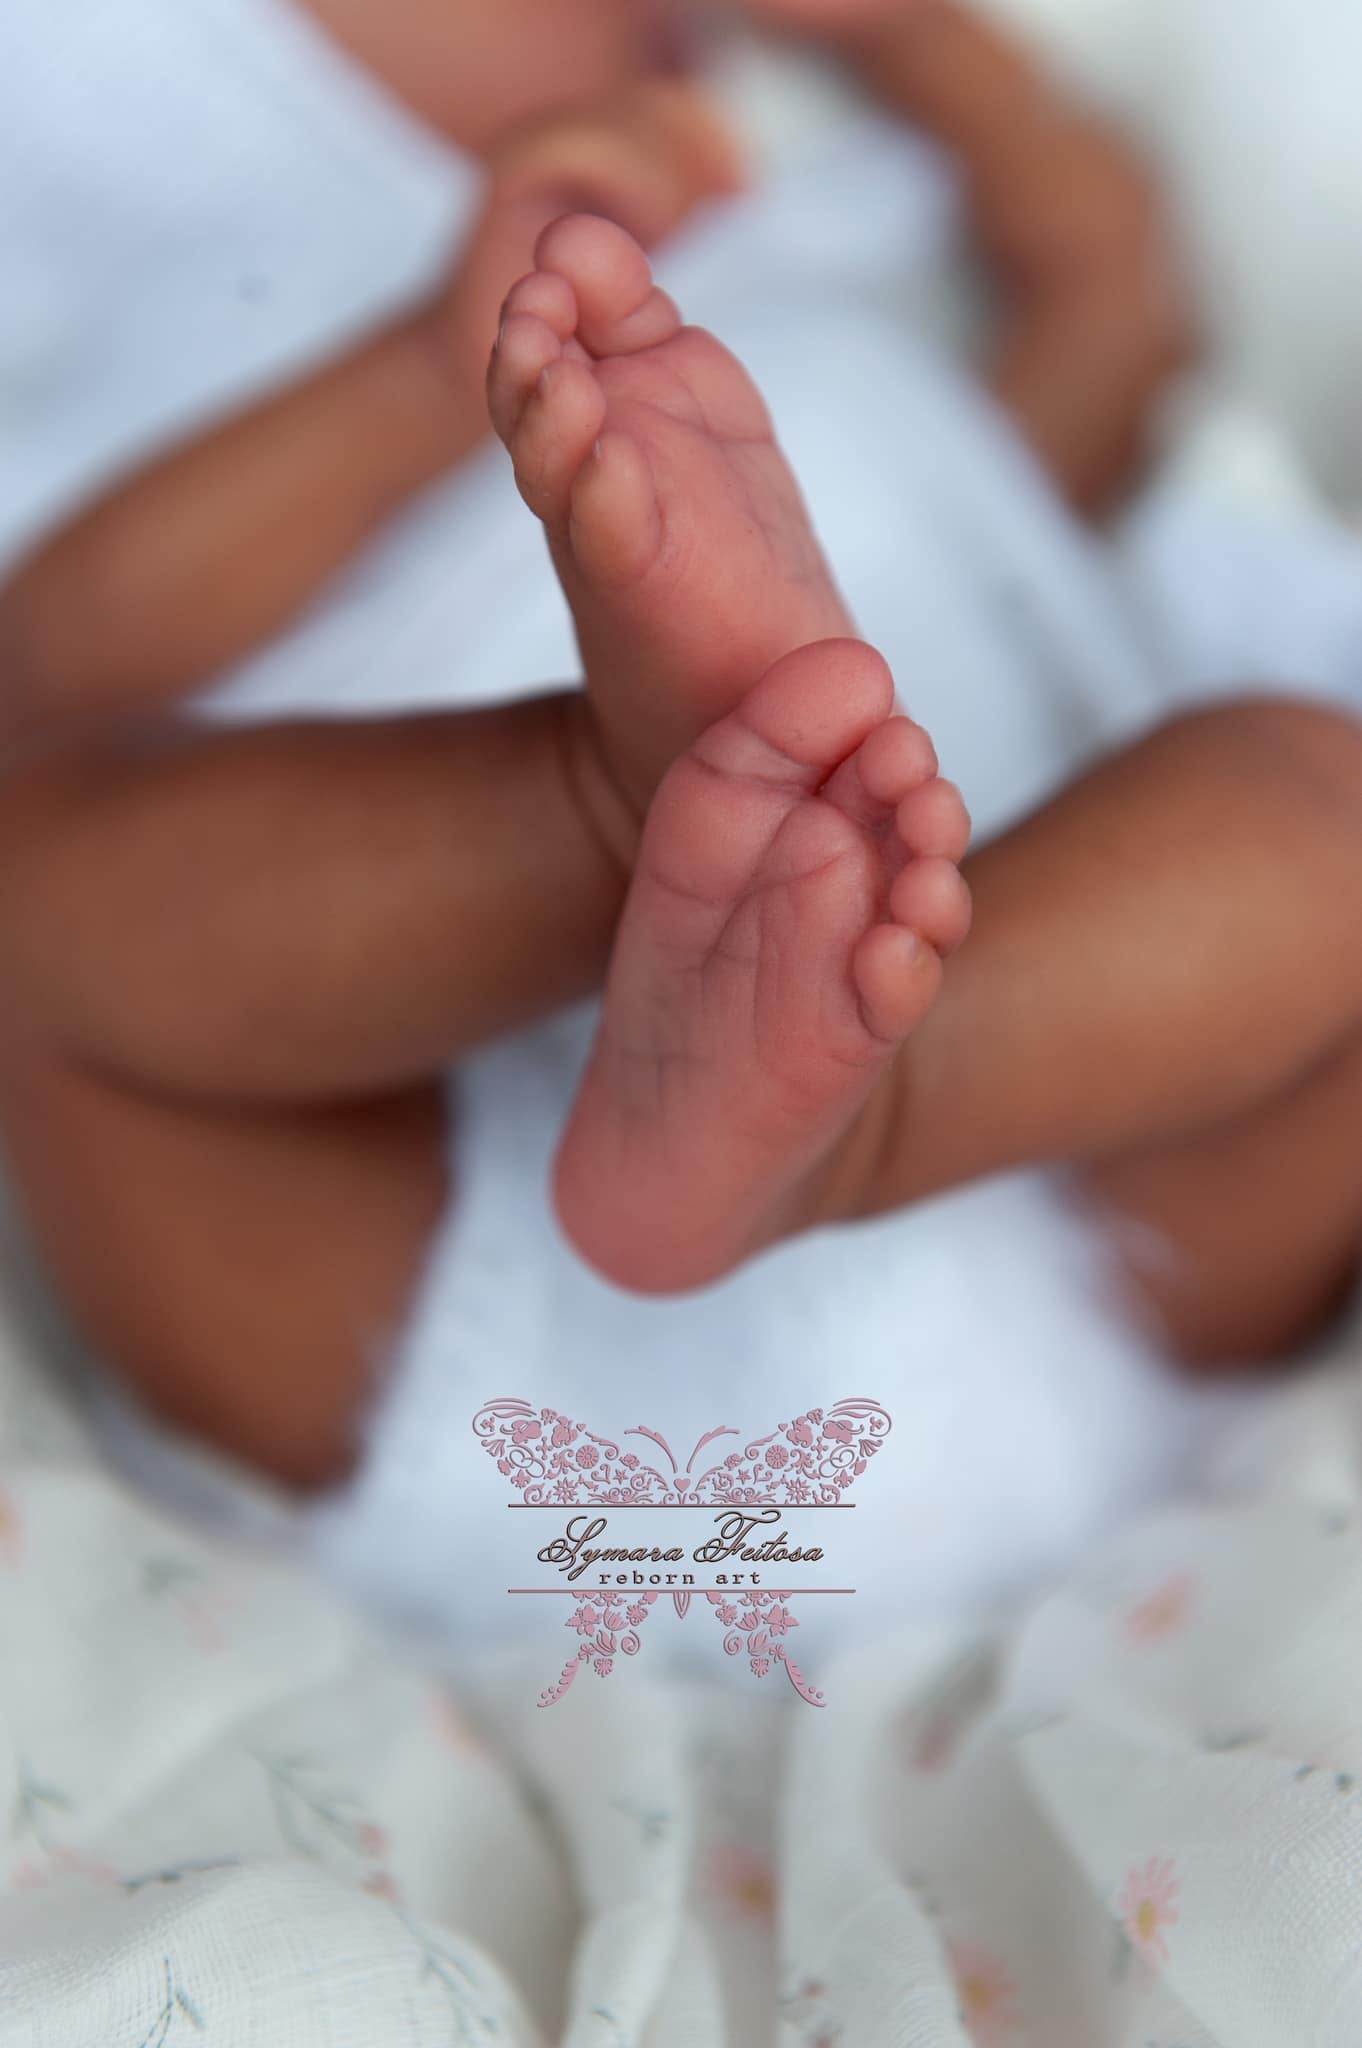 Priscila Lopez – Baby Creation Reborn